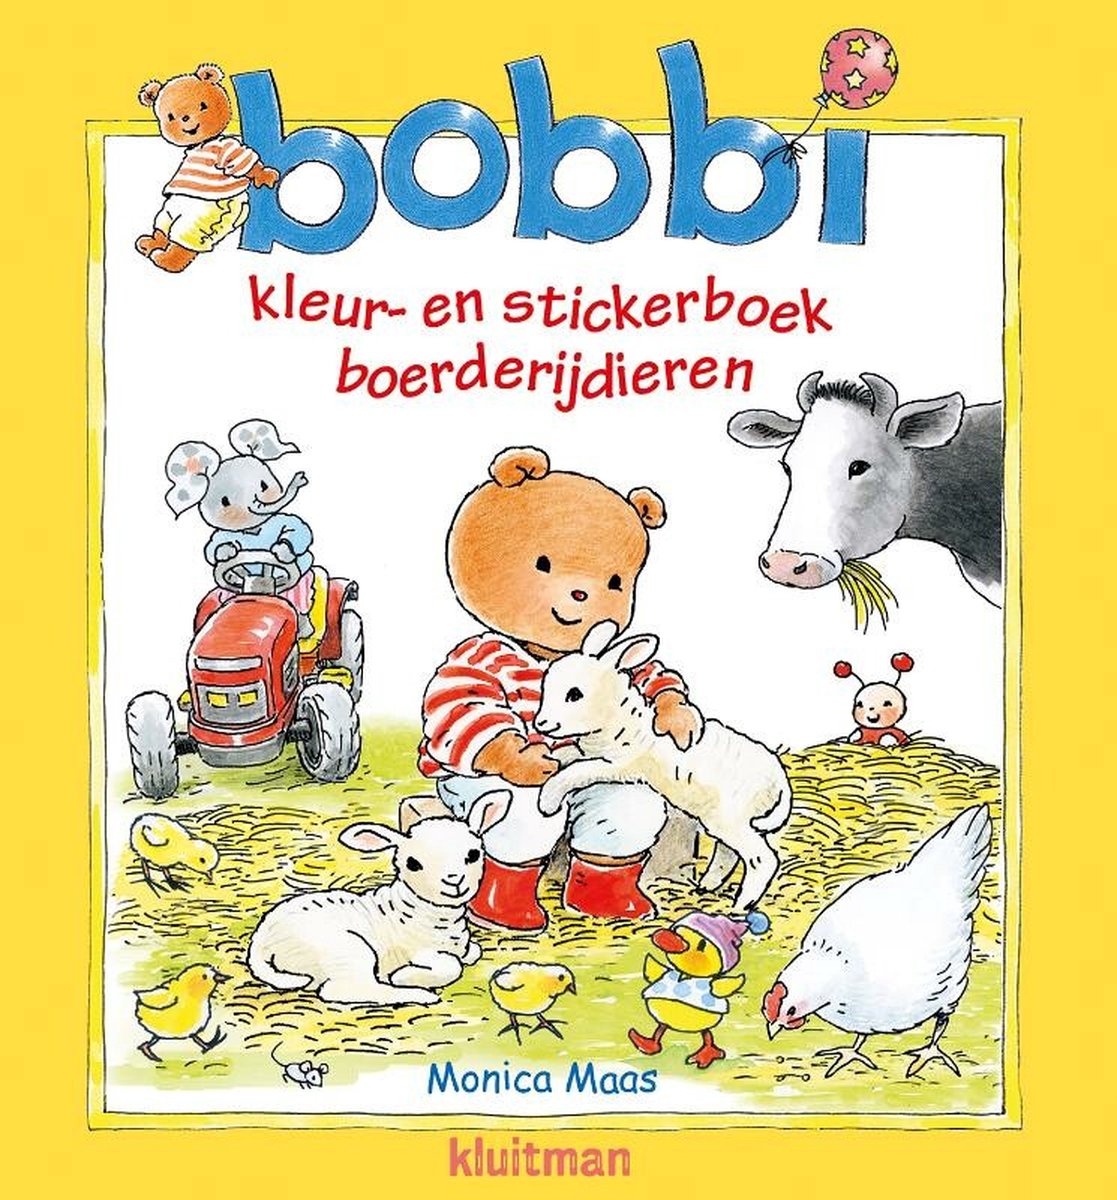 Bobbi - Kleur- en stickerboek boerderijdieren, Monica Maas | 9789020683875  | Boeken | bol